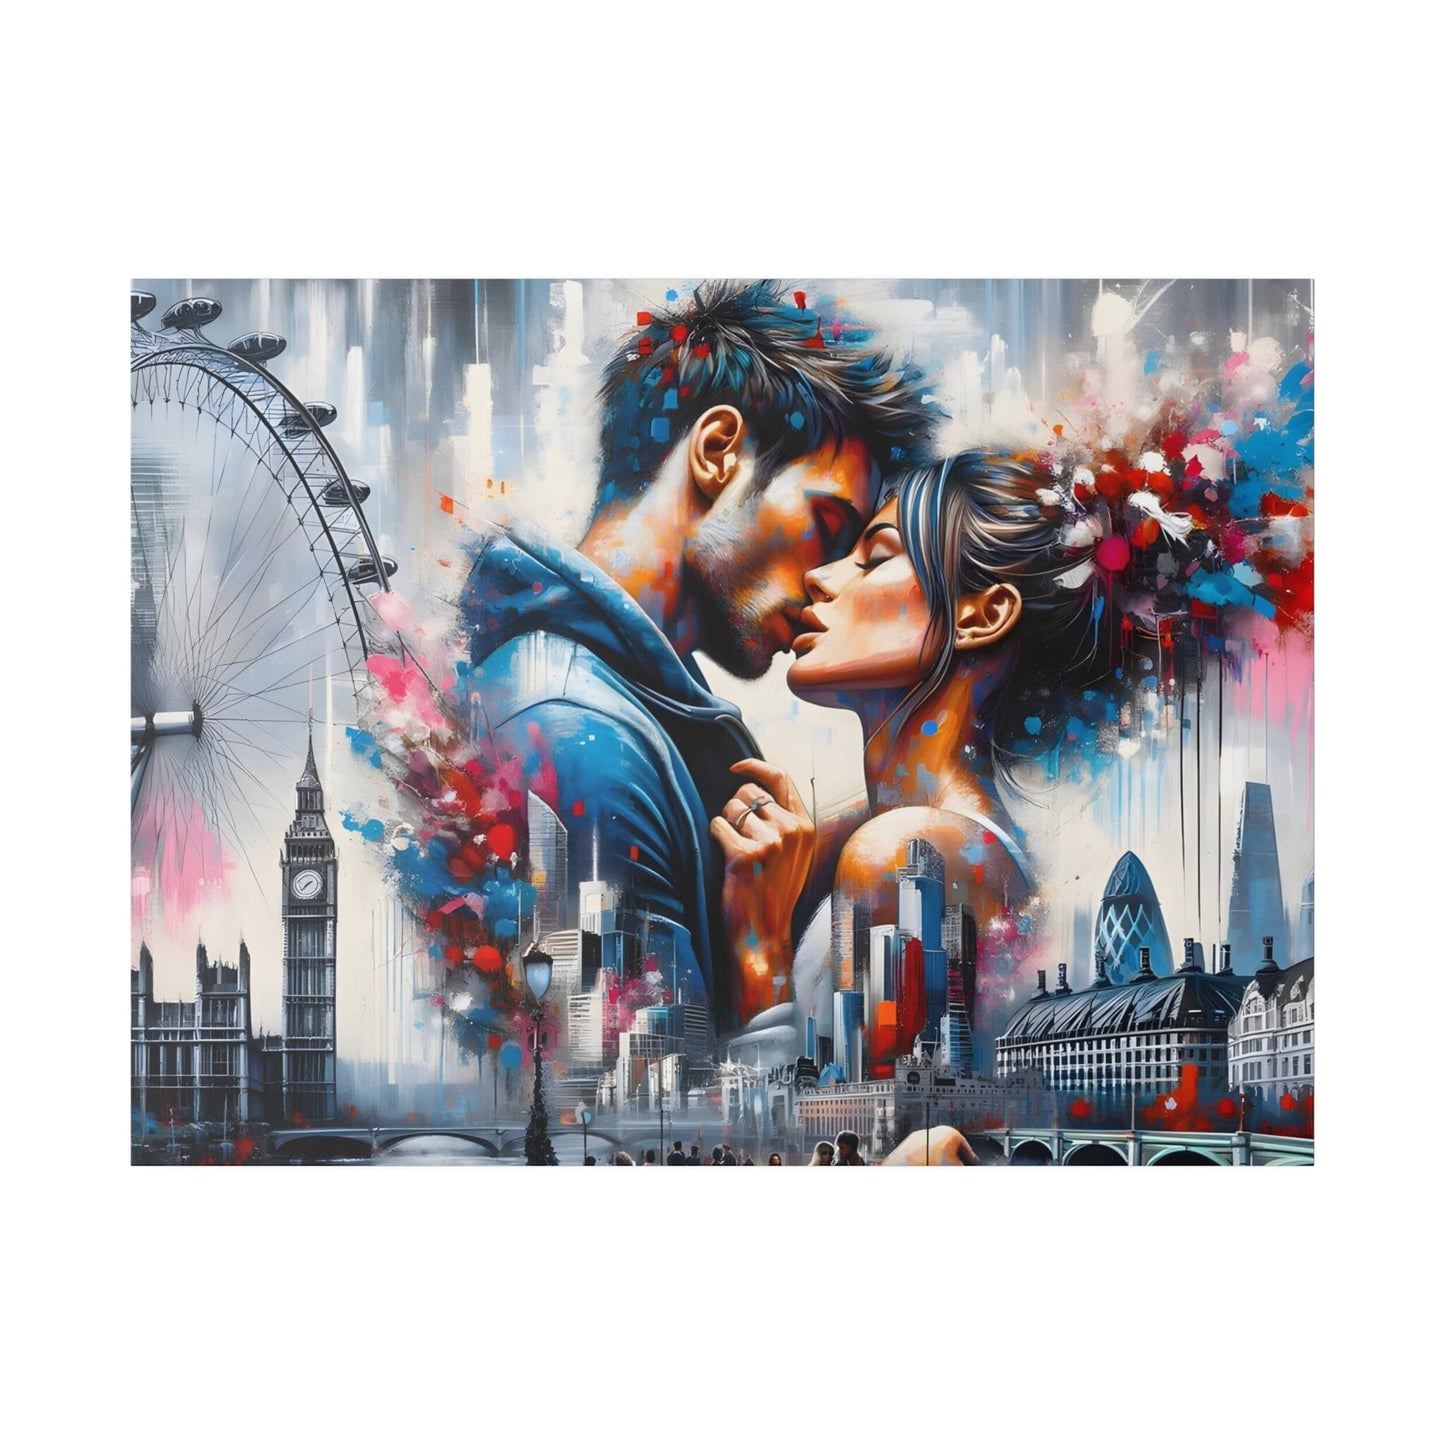 Mia Starlight. London Love Affair. Graphic Art Canvas